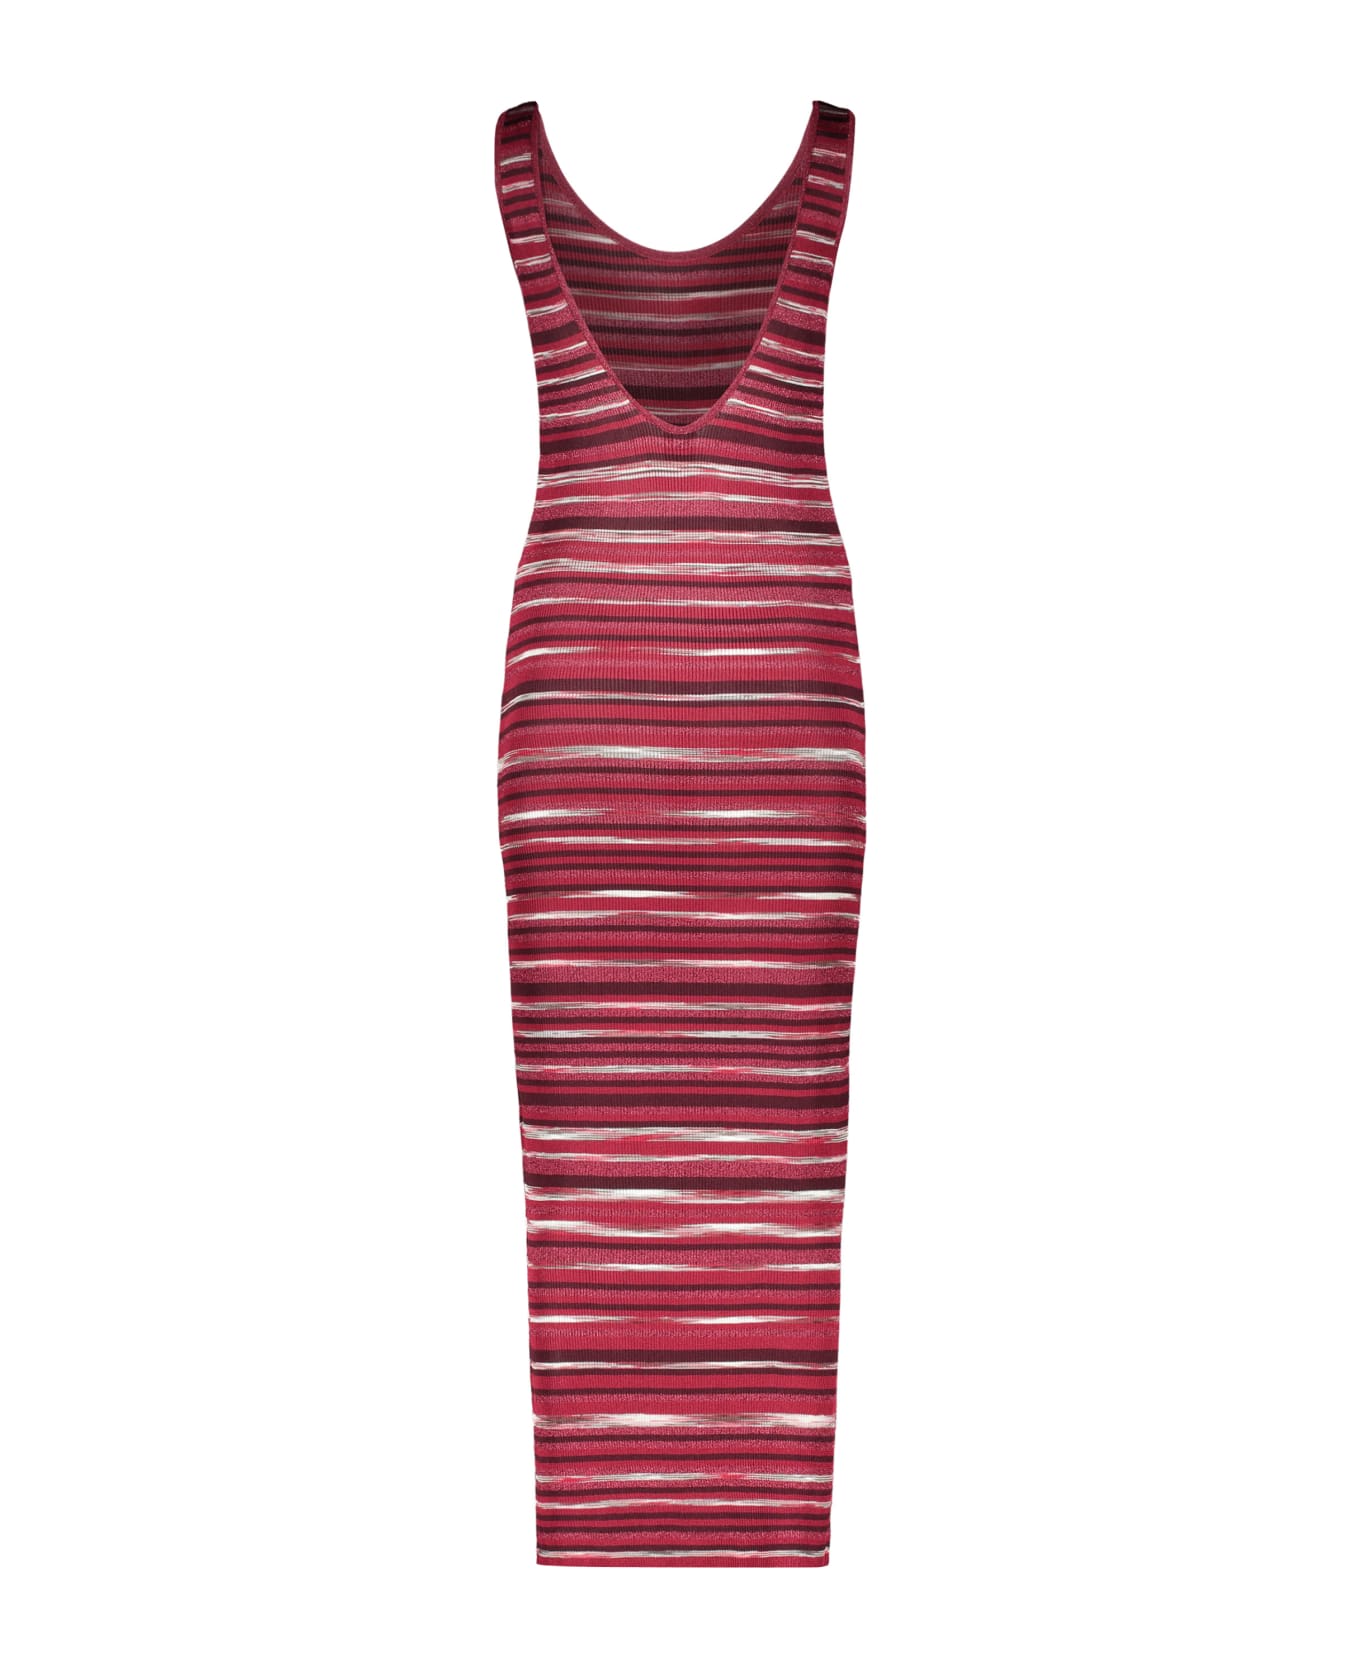 M Missoni Ribbed Knit Dress - Red-purple or grape